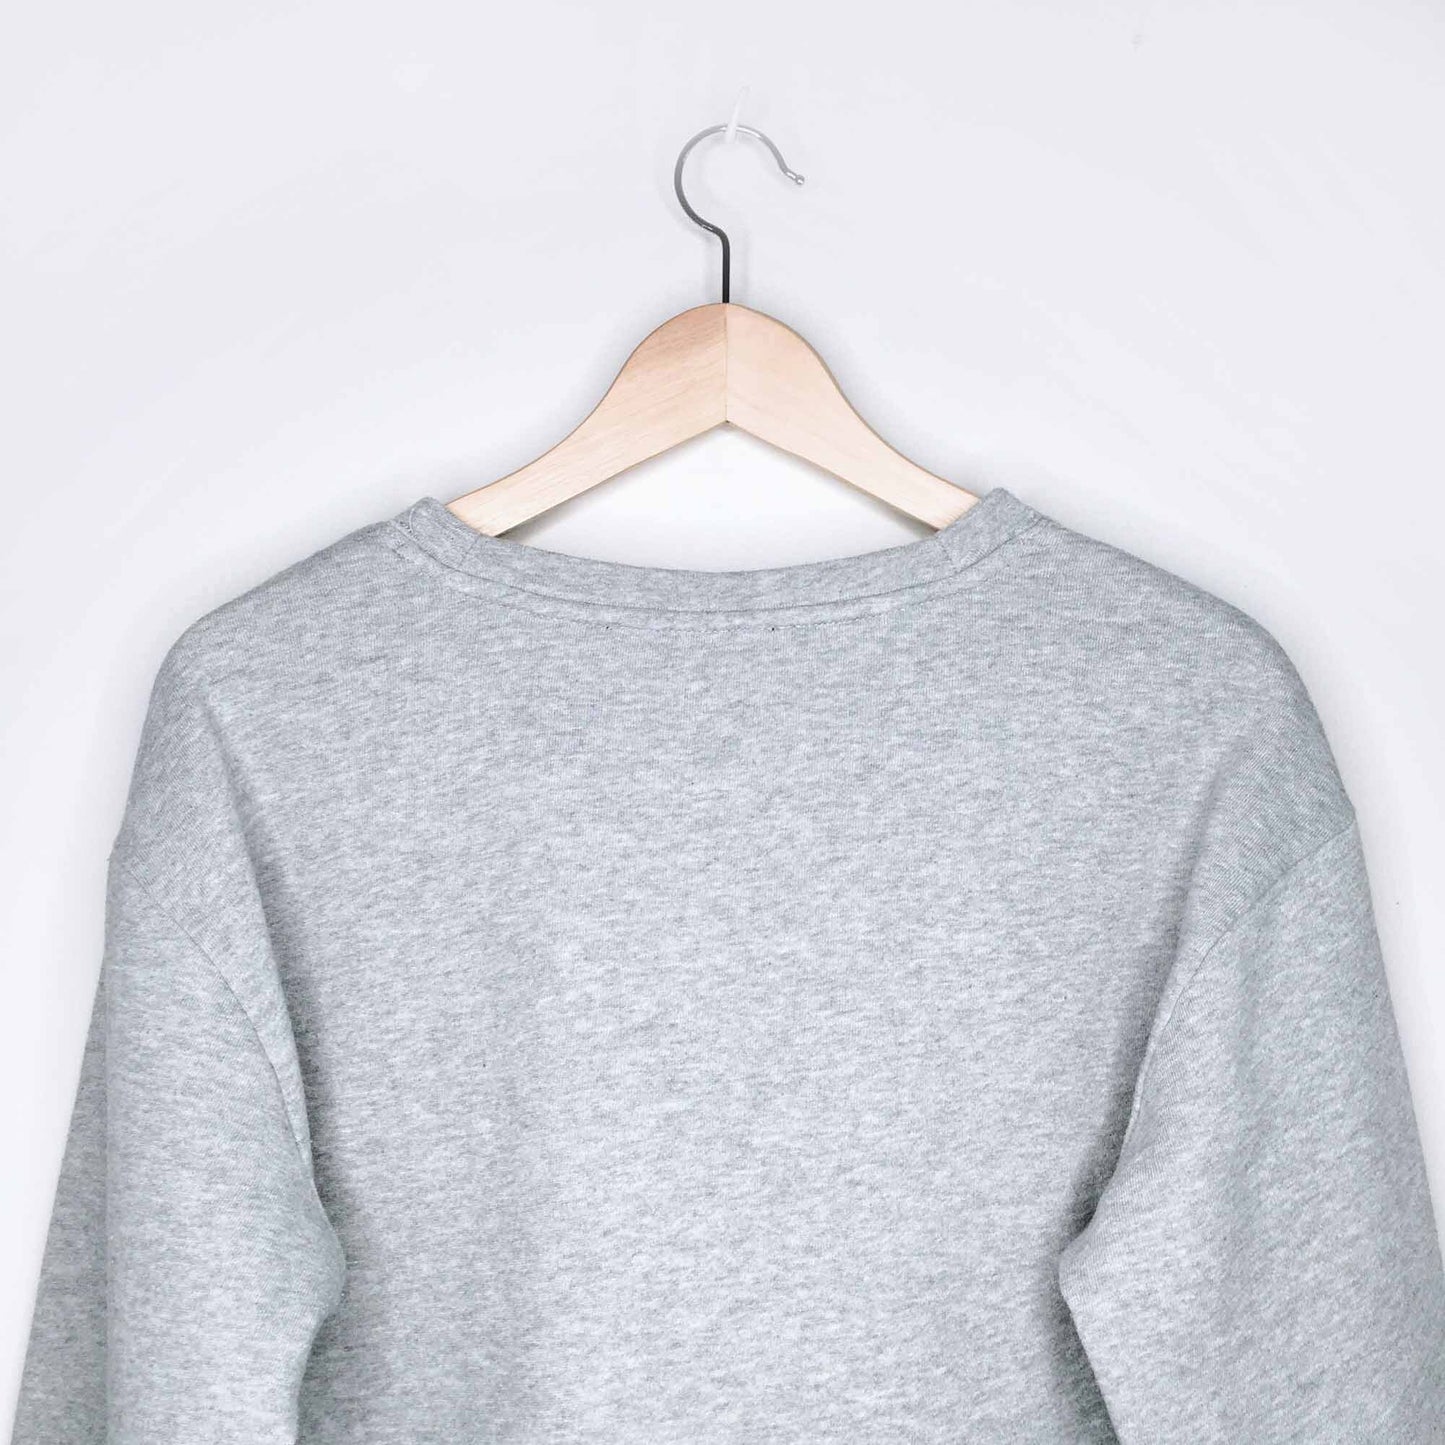 Tommy Hilfiger crewneck sweatshirt - size Medium